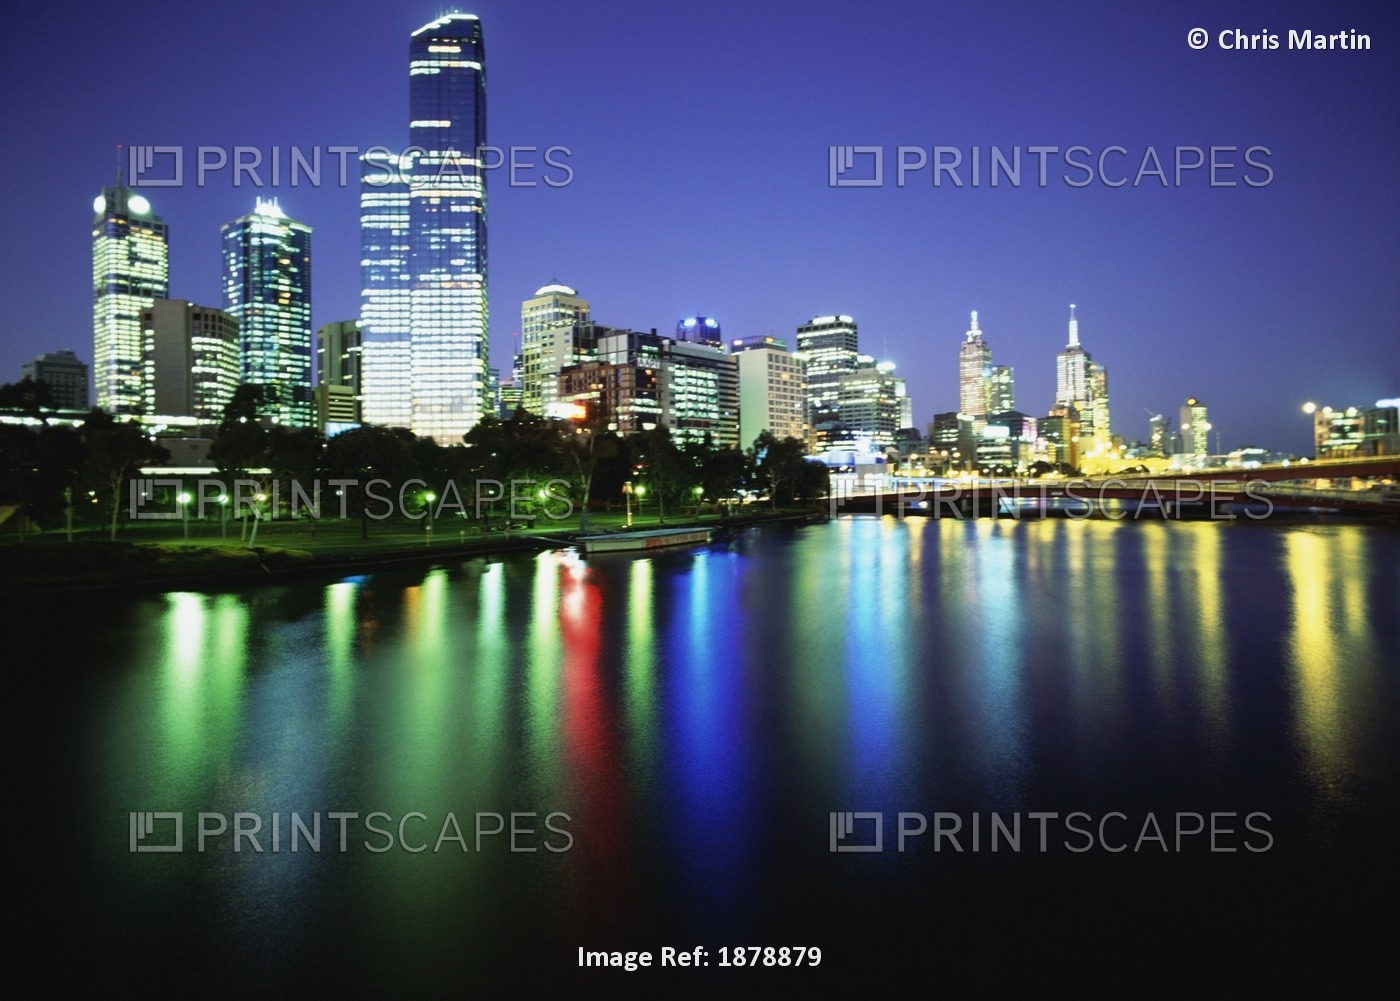 Melbourne Skyline At Night